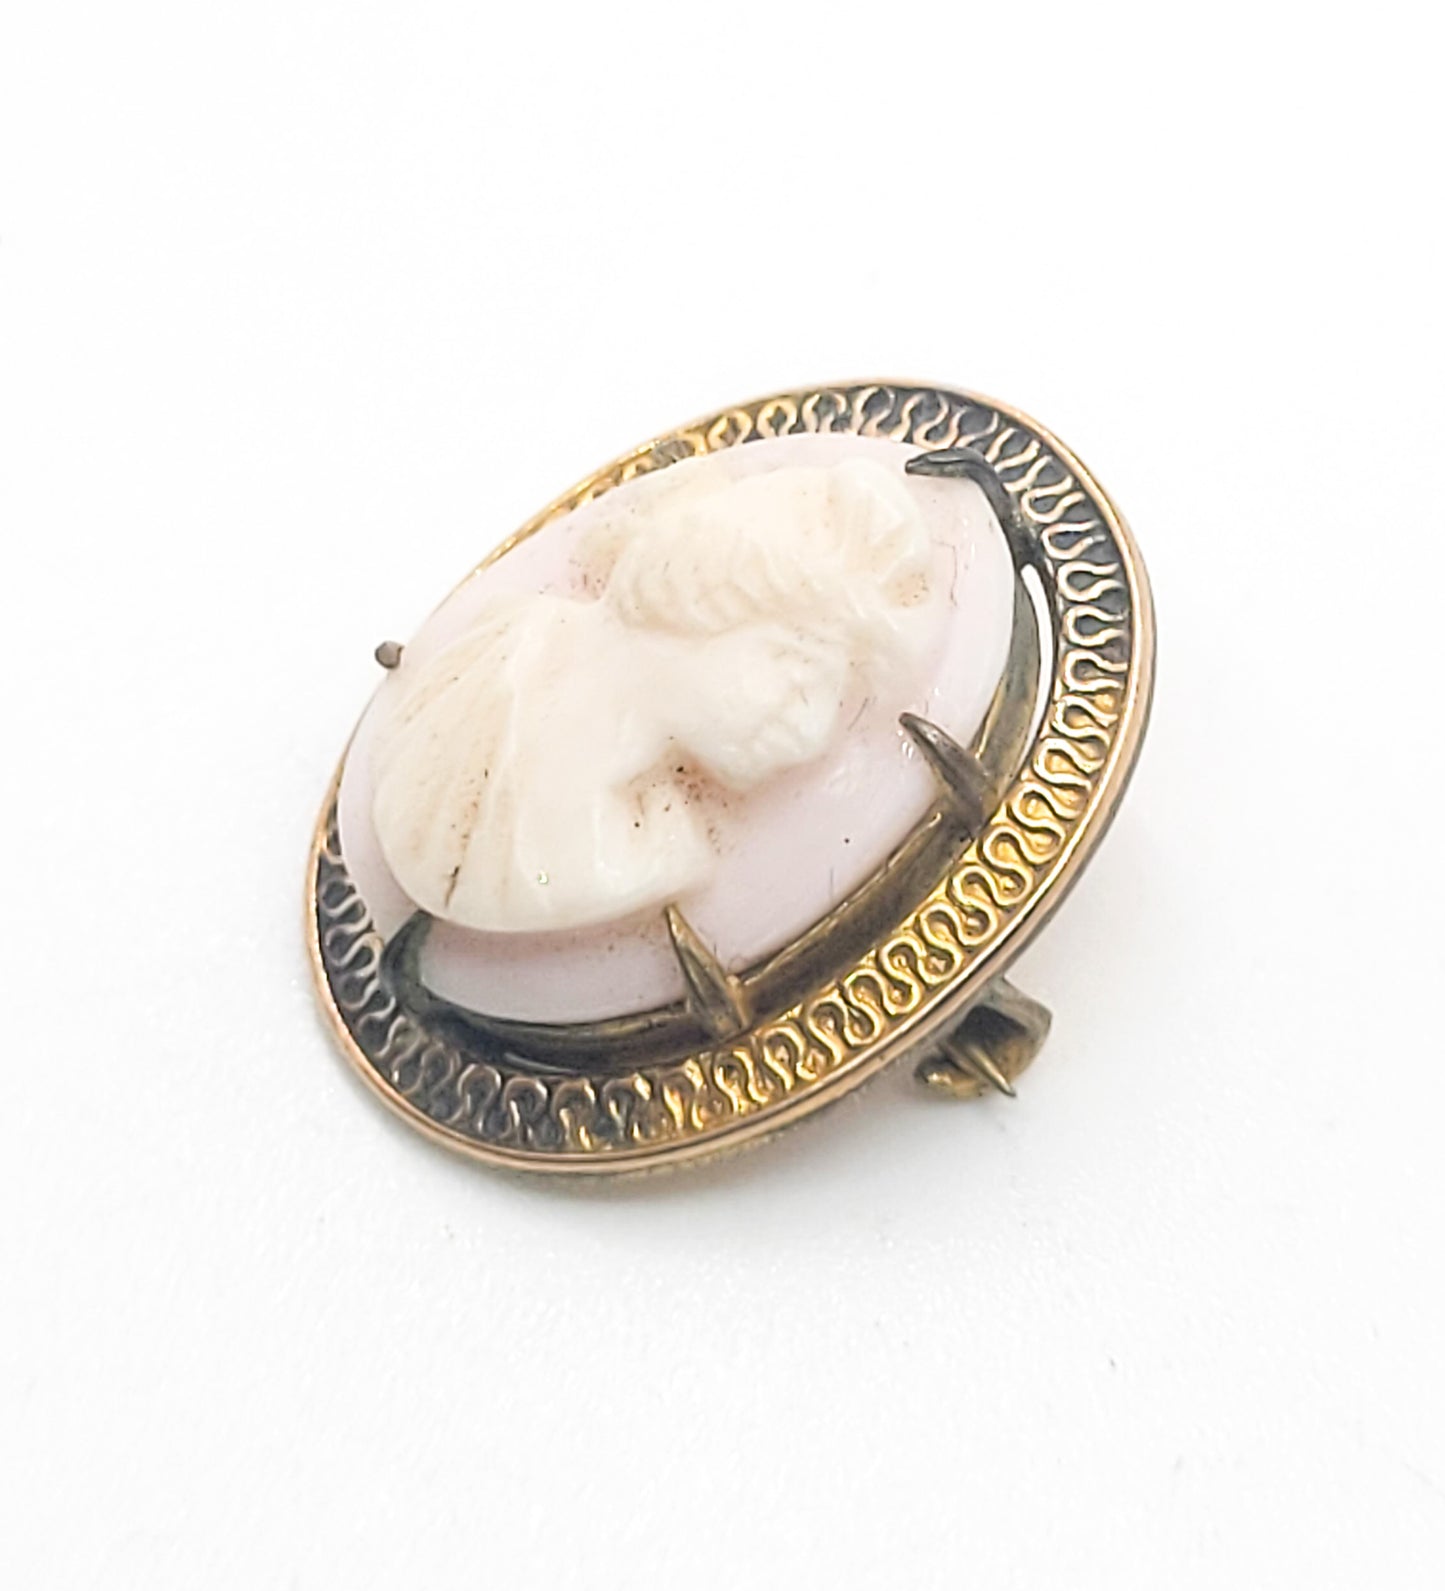 John H Peckham JHP antique pink glass small gold filled cameo brooch